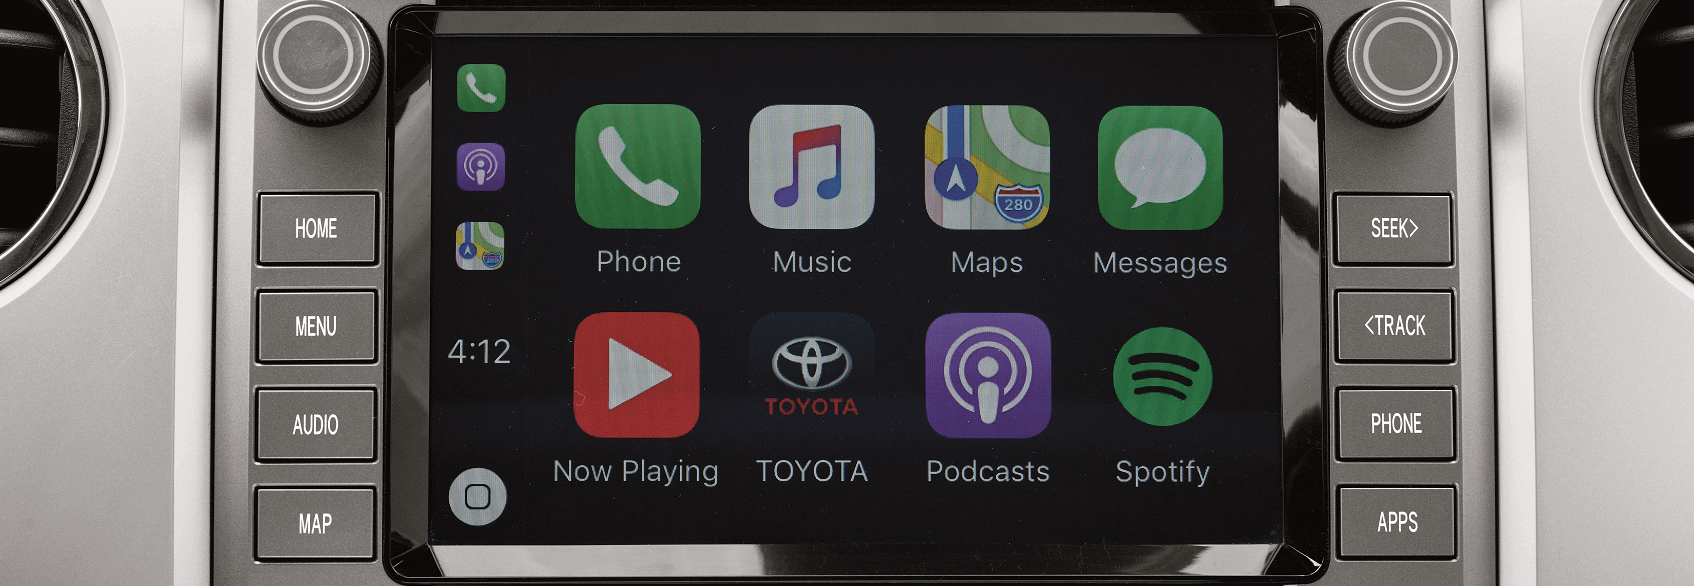 2020 Toyota Tundra Entertainment Features 